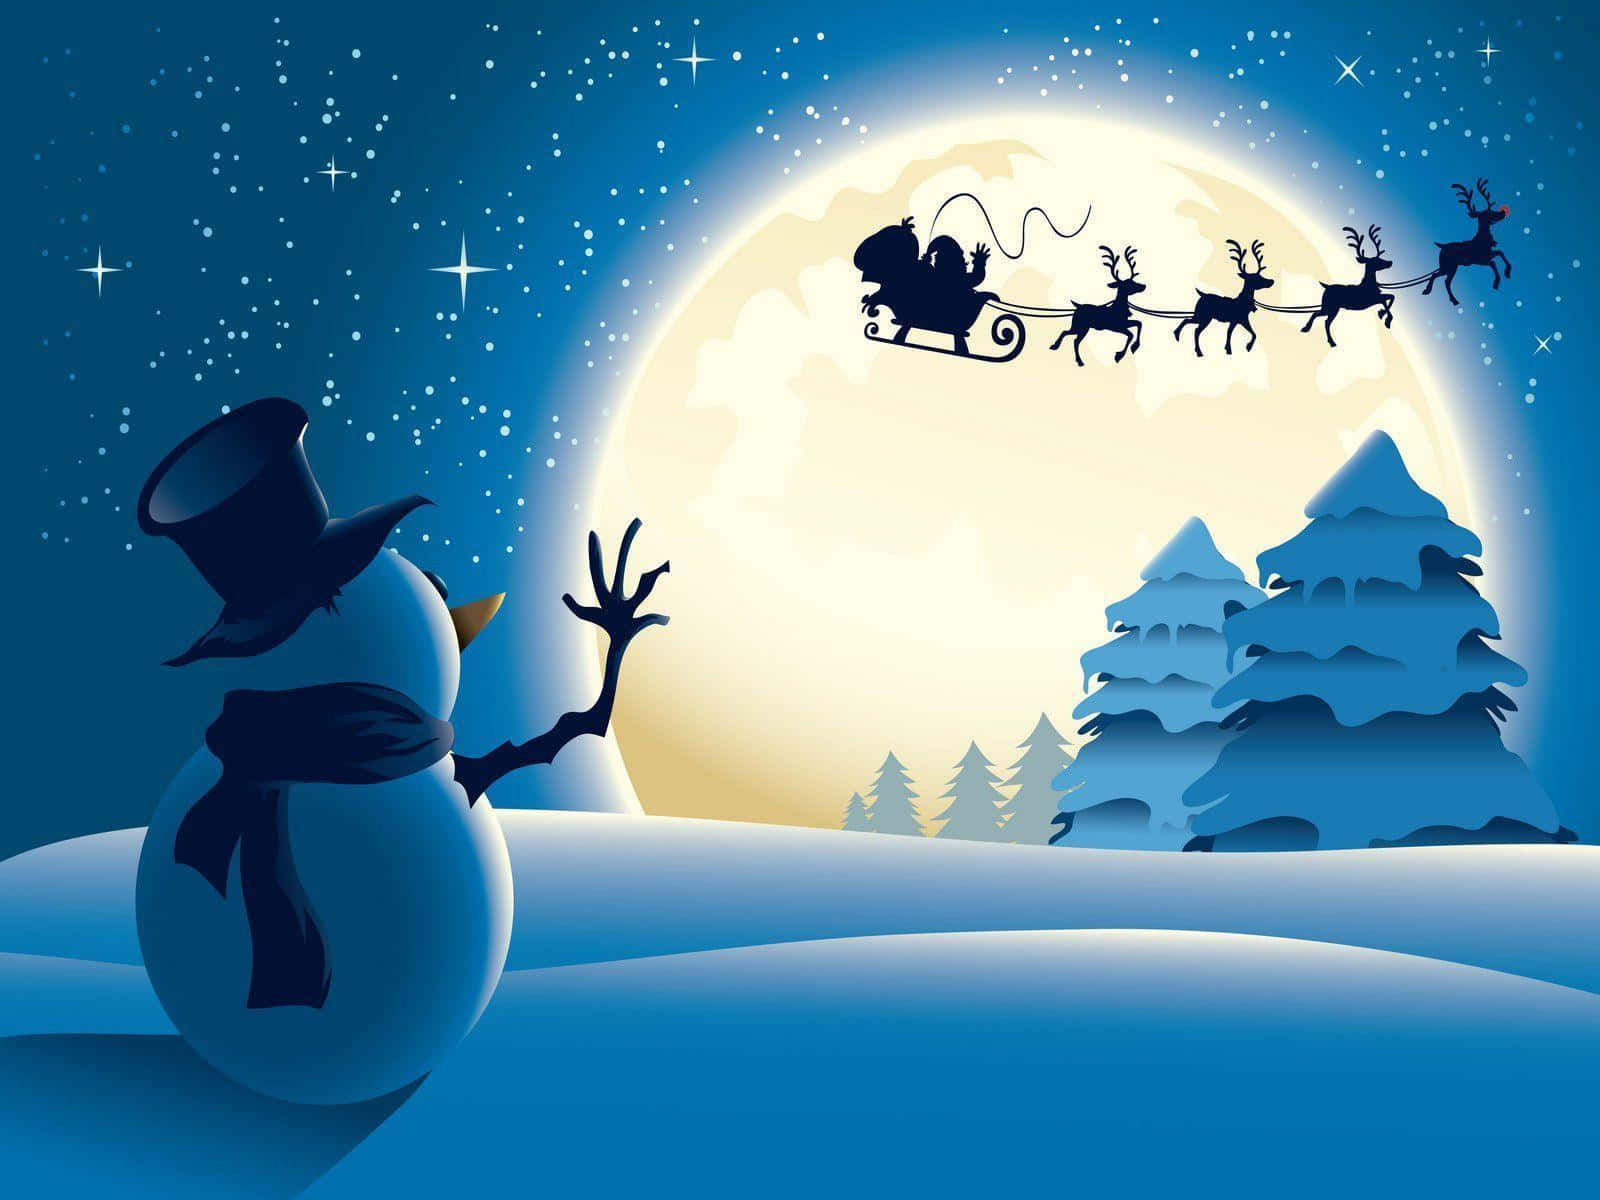 Cool Christmas Eve Santa Claus Snowman Sculpture Background